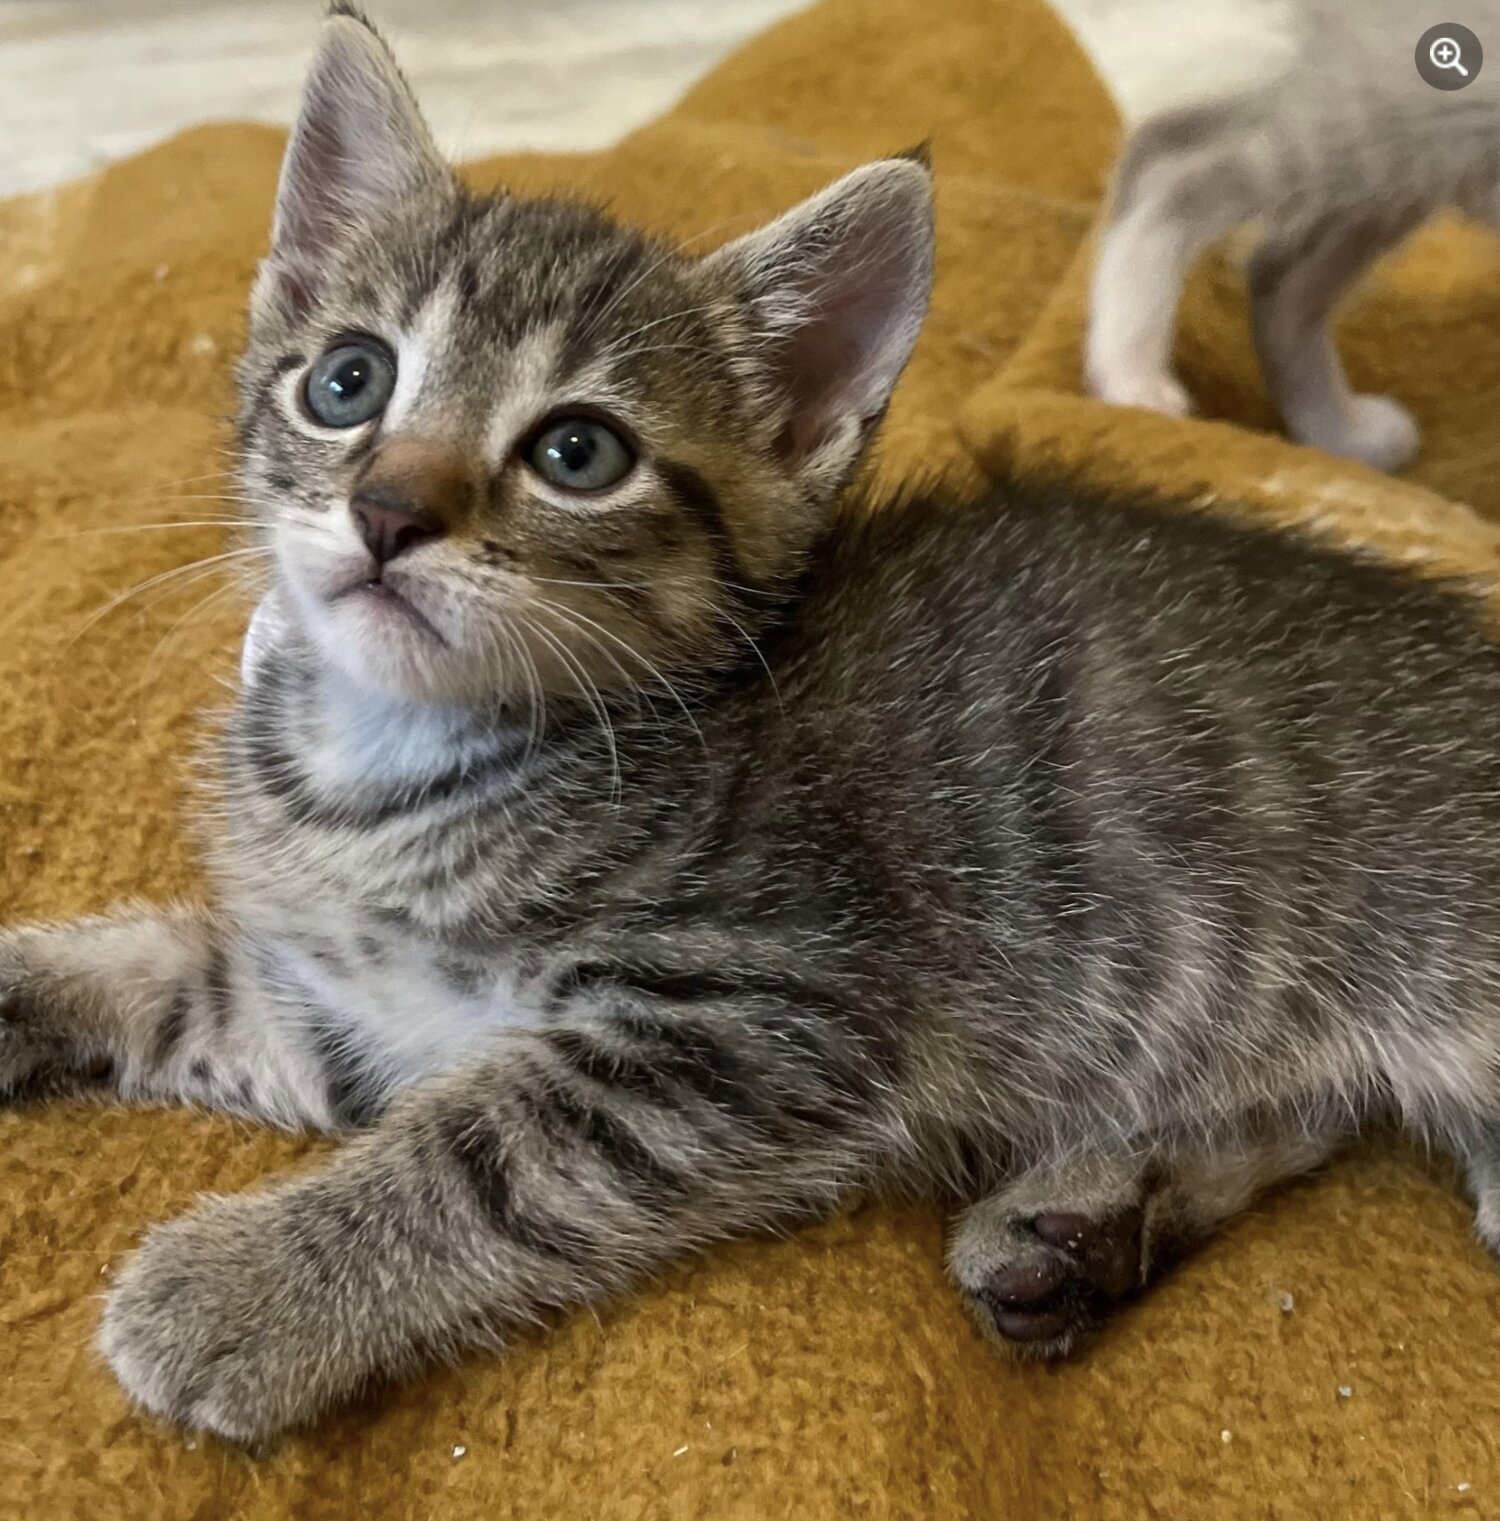 Rescue Kittens for Adoption